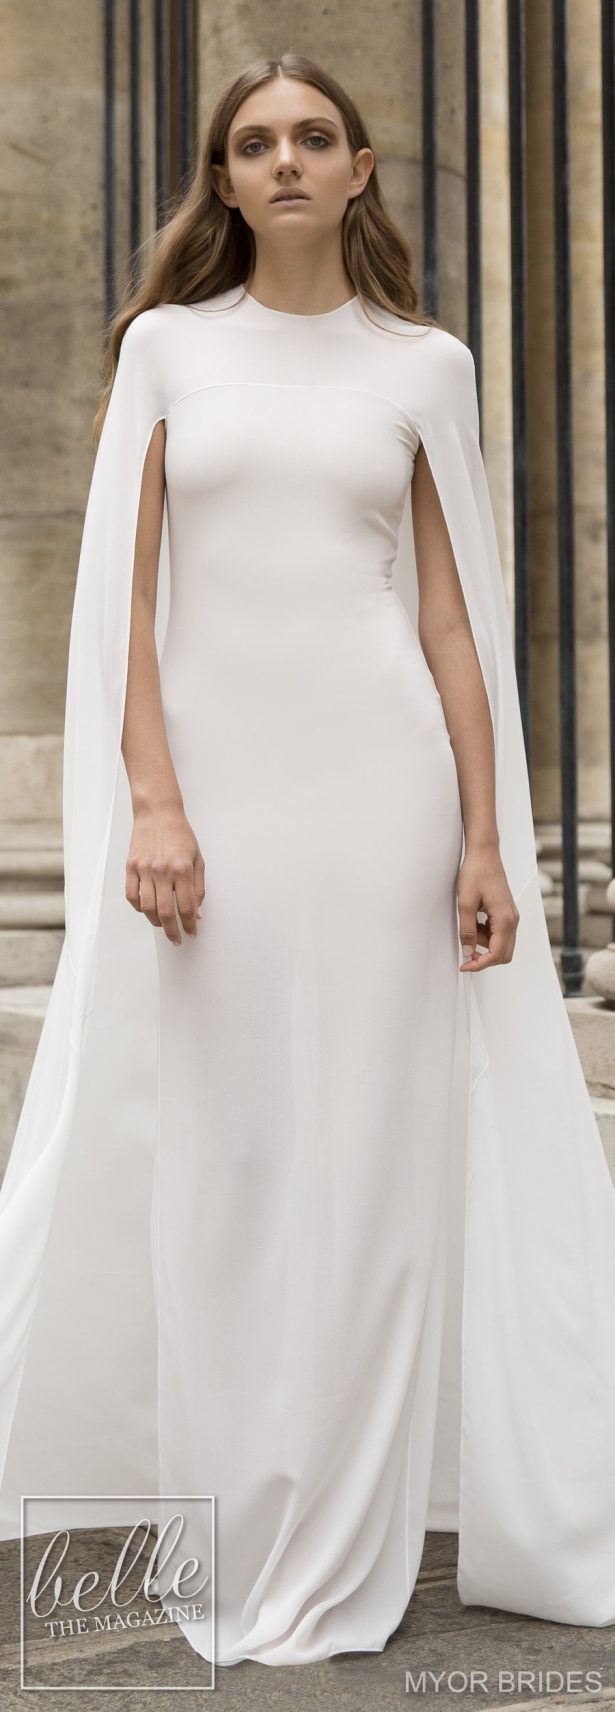 MYOR Brides Wedding Dress Collection 2018 - ALANNA Dress